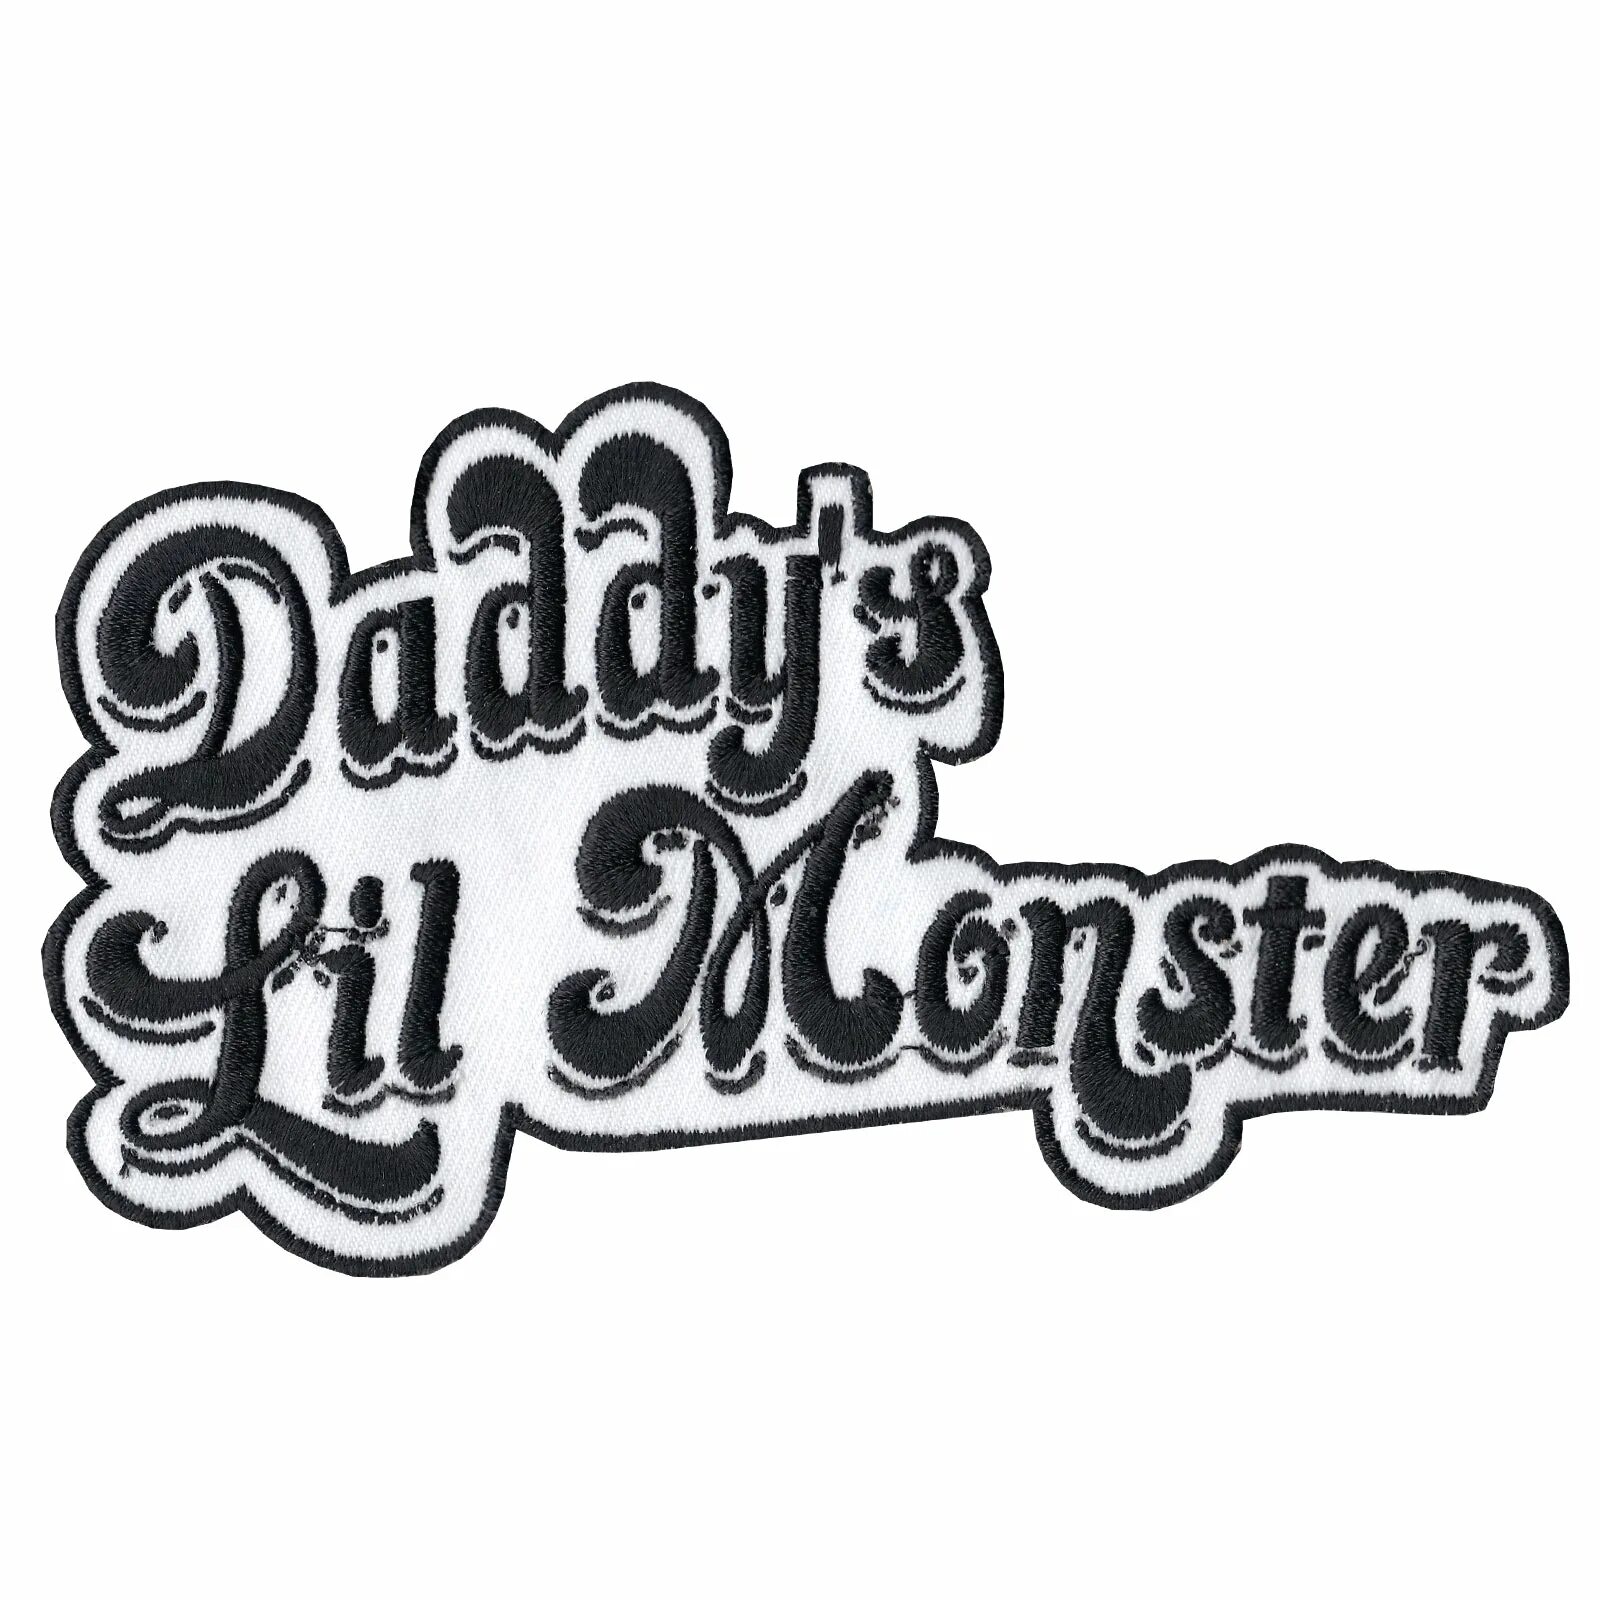 Daddy's Lil Monster надпись Харли Квинн. Daddy's Lil Monster футболка. Надпись на фктболке Харли Квин. Надпись на футболке Харли Квинн. Daddy's lil